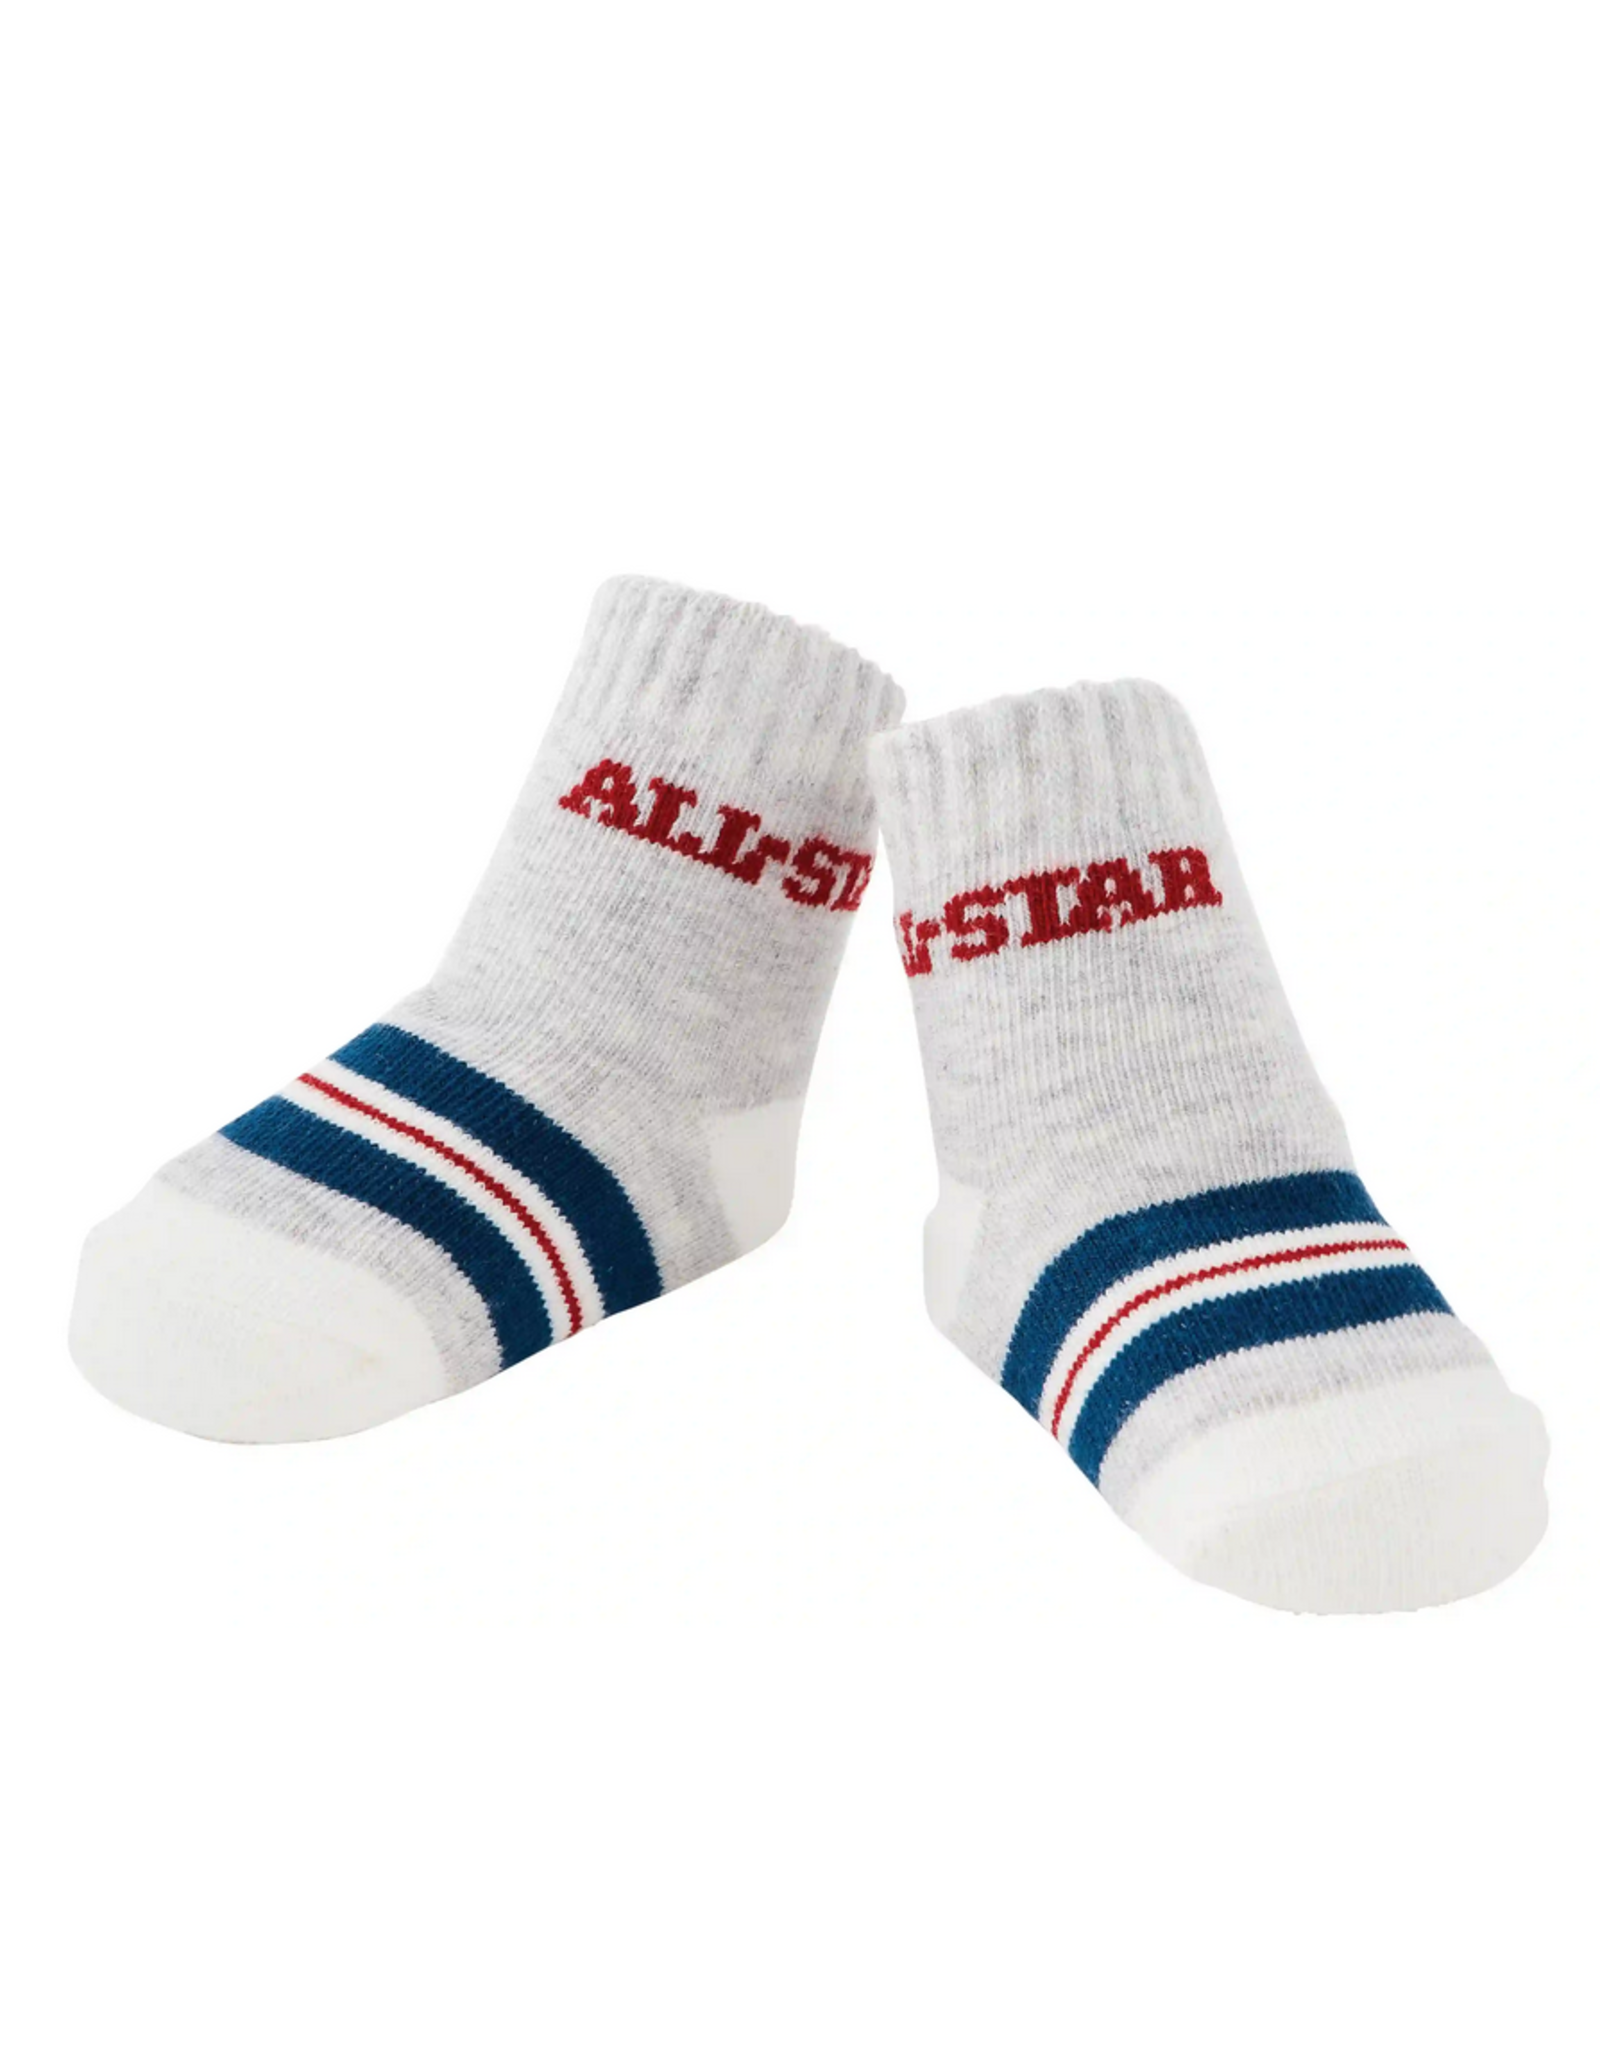 Mudpie All Star Stripe Socks